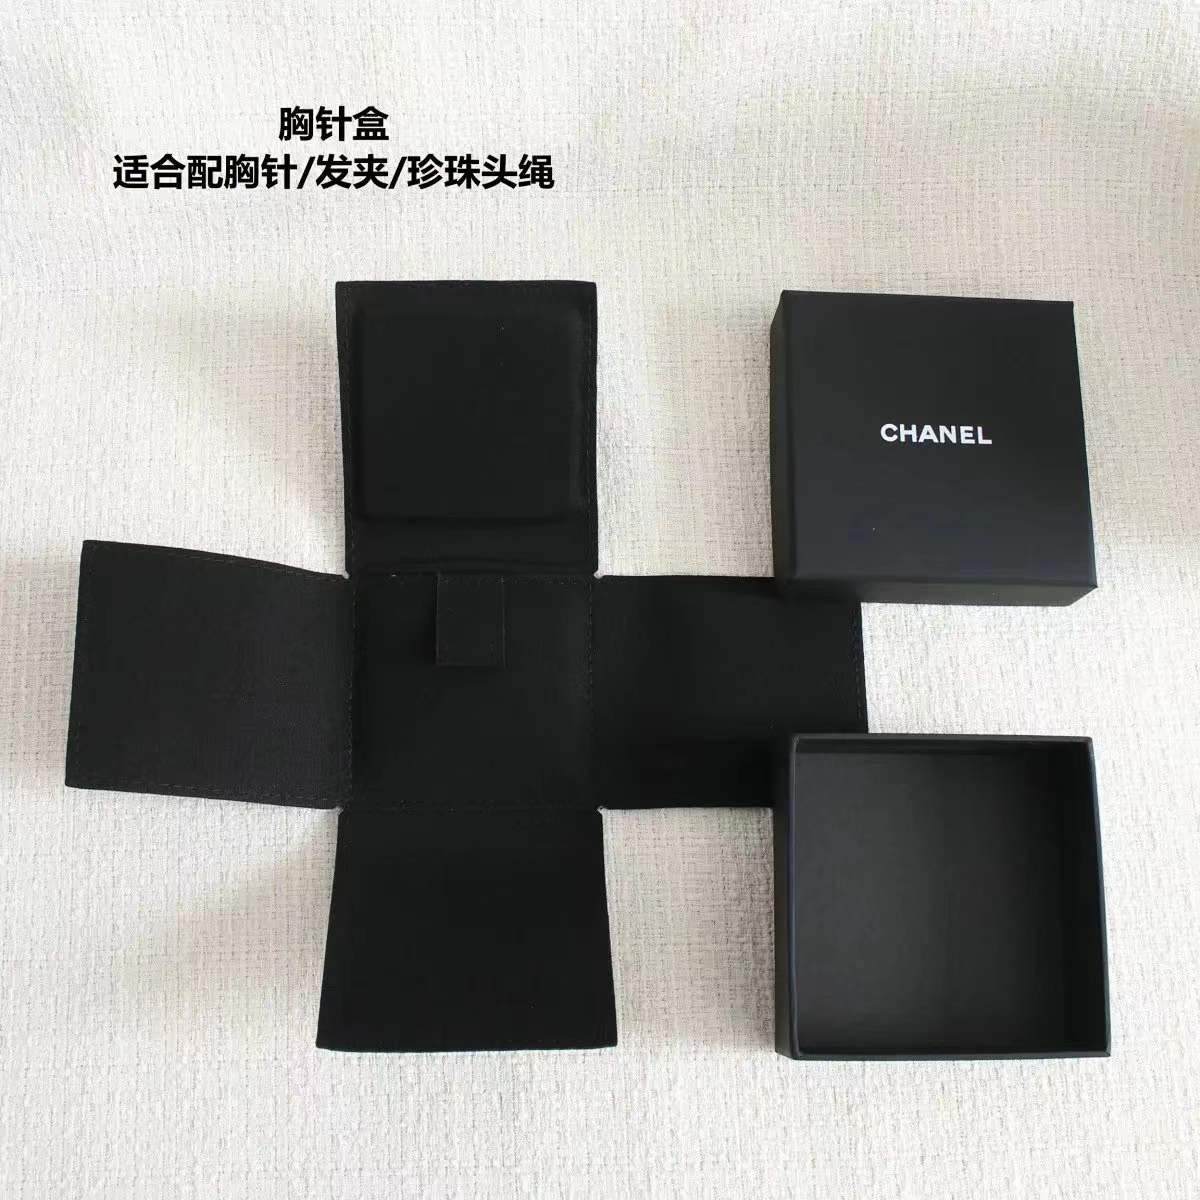 1:1 Chanel brooch box 1pcs